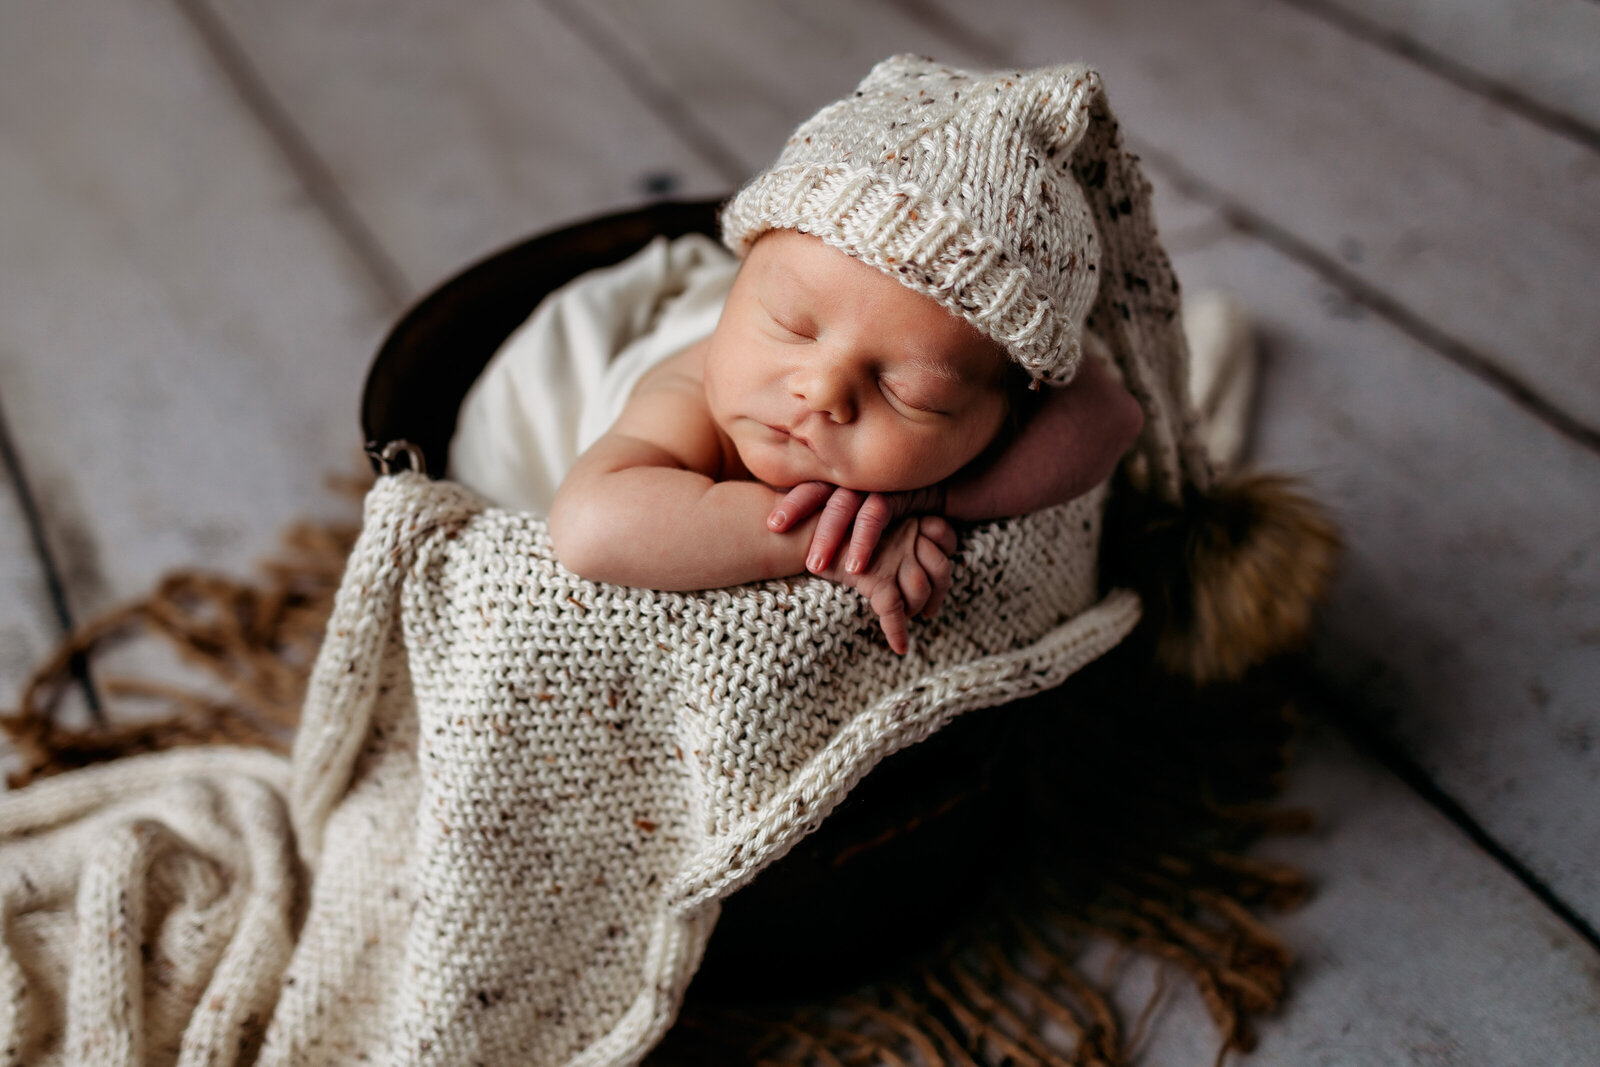 Newborn boy sleeping in bucket wearing a cream sleepy cap